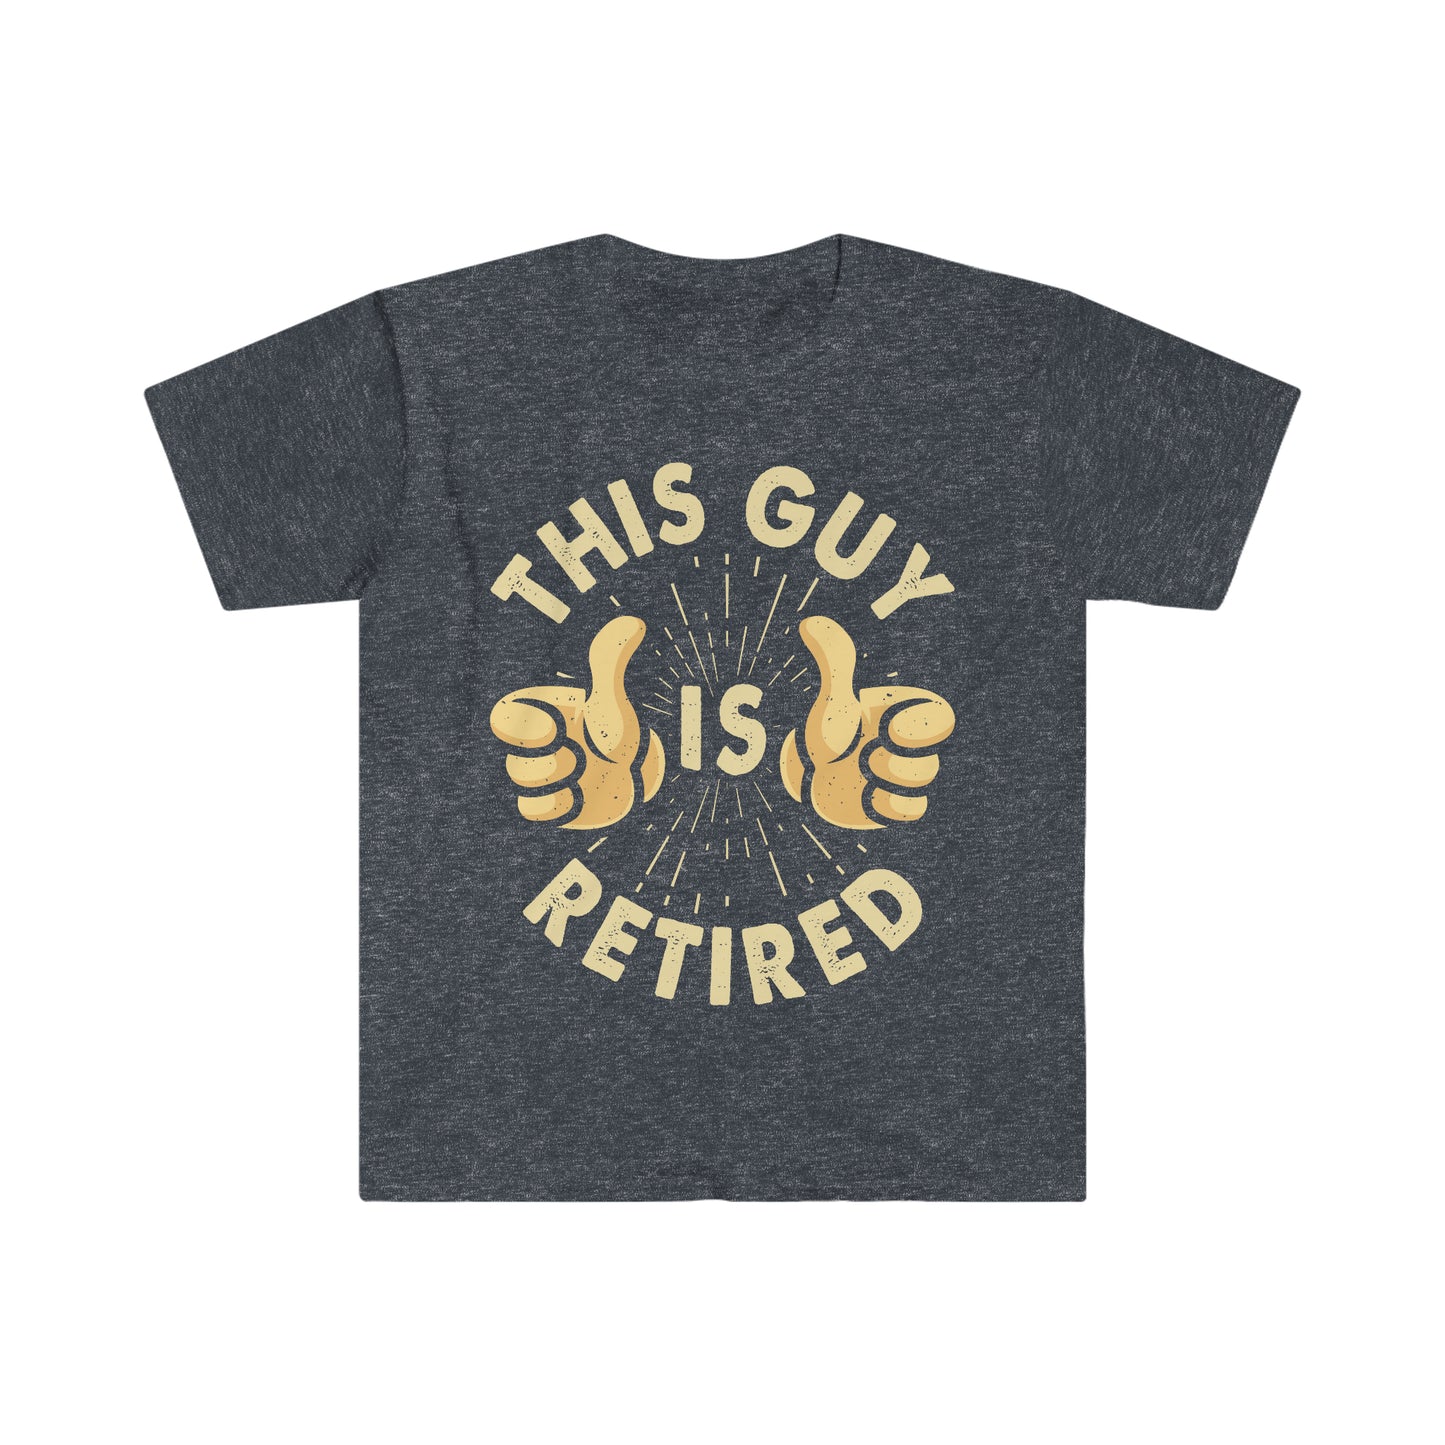 This Guy is Retired, Retirement Shirt for Men